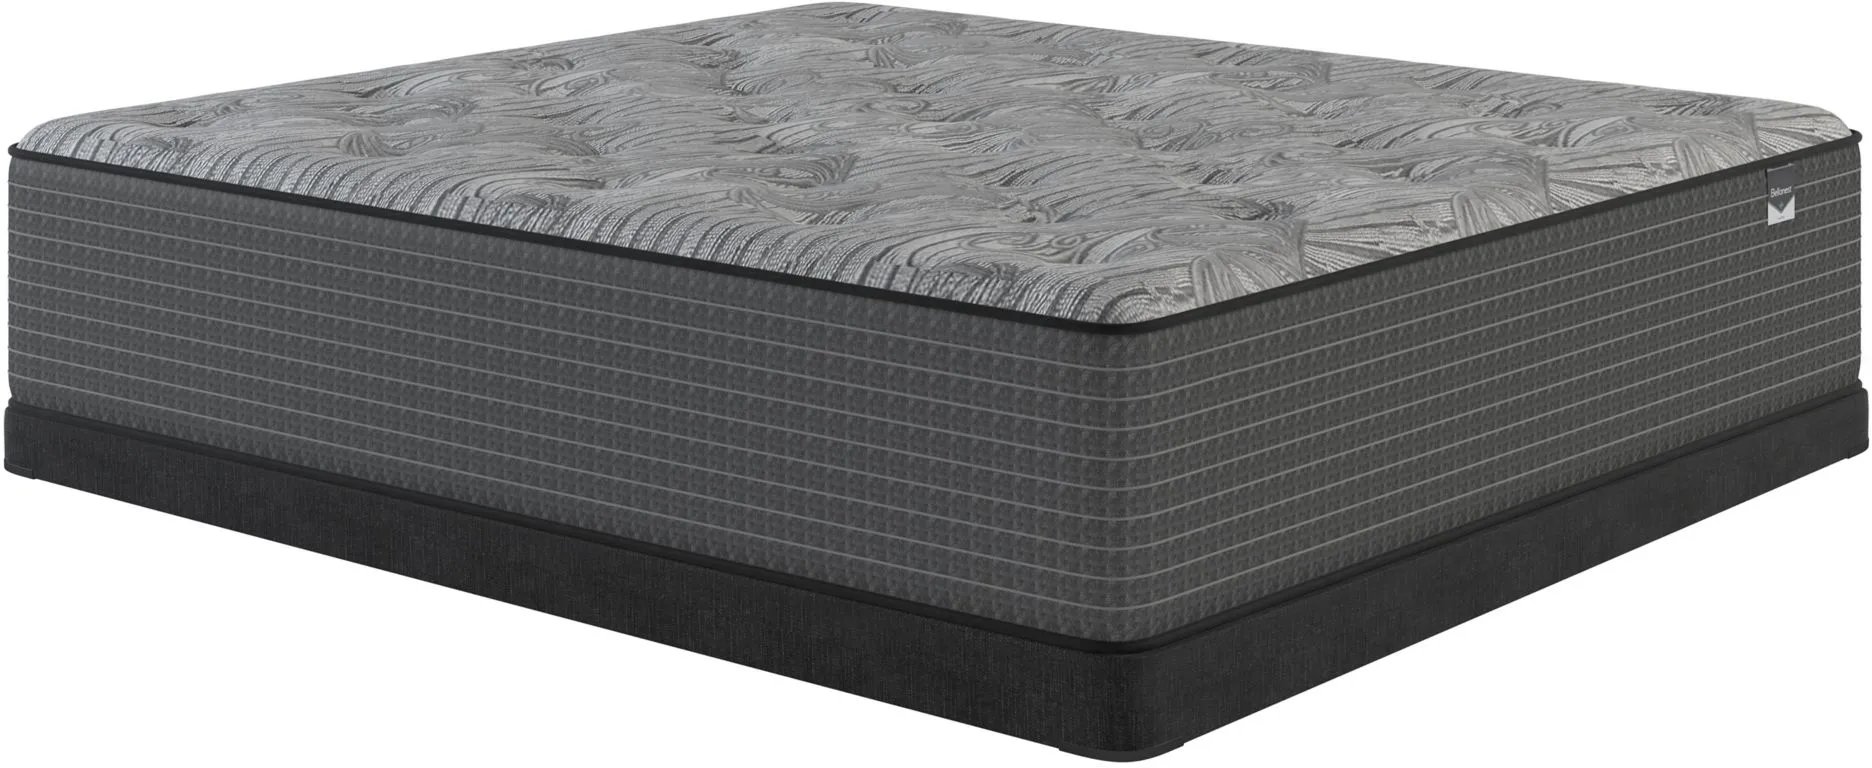 bellanest dahlia plush mattress